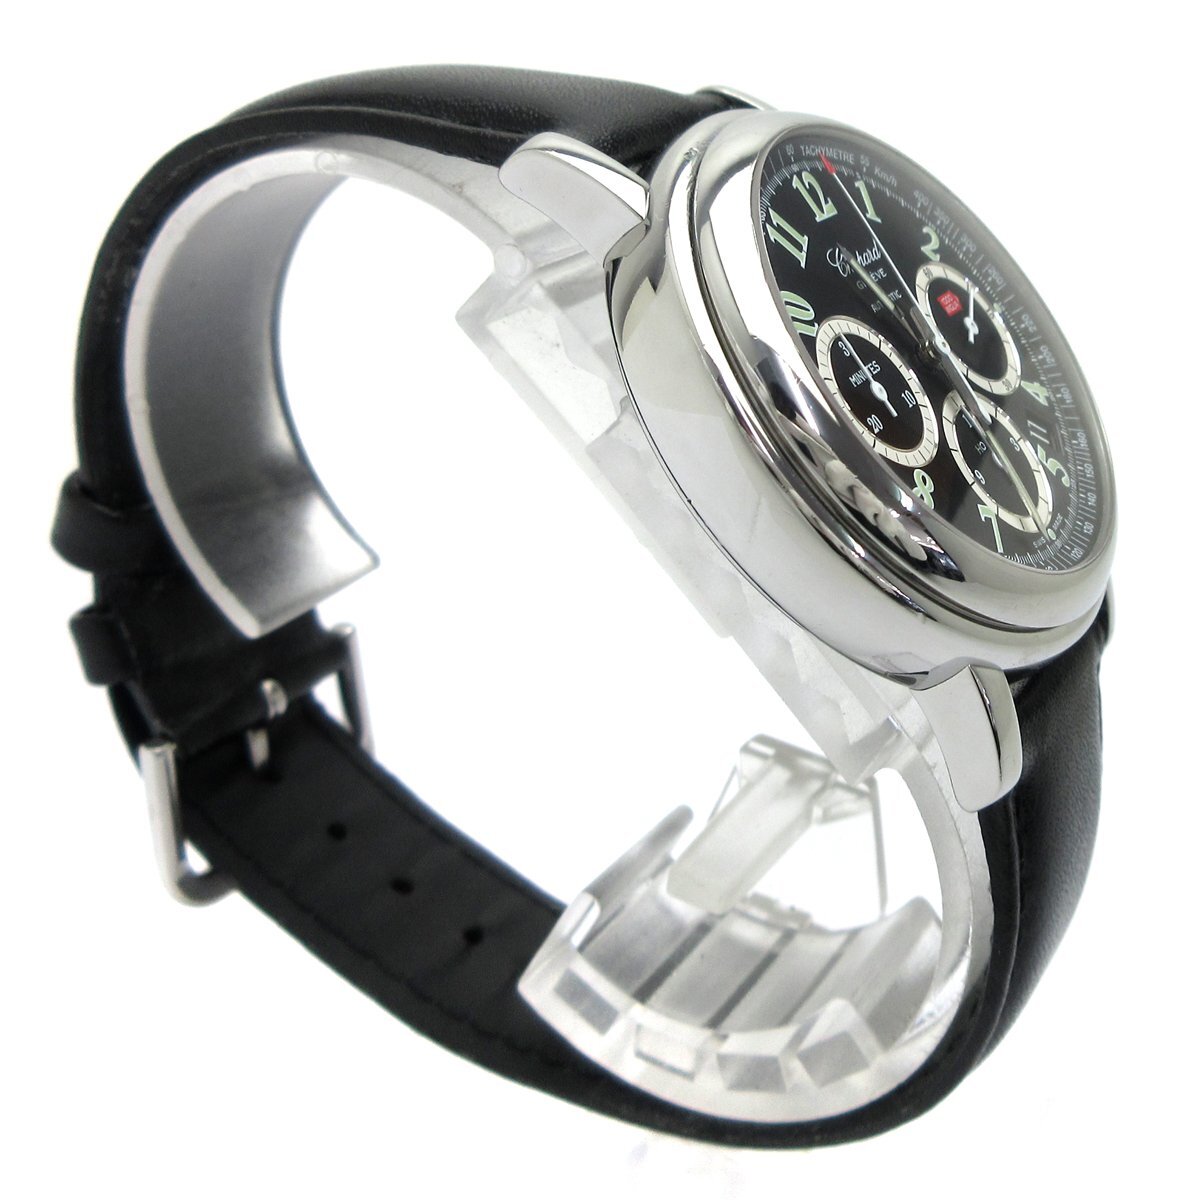 1 jpy Chopard miremi rear chronograph automatic men's black face 8331 clock Chopard self-winding watch rare 